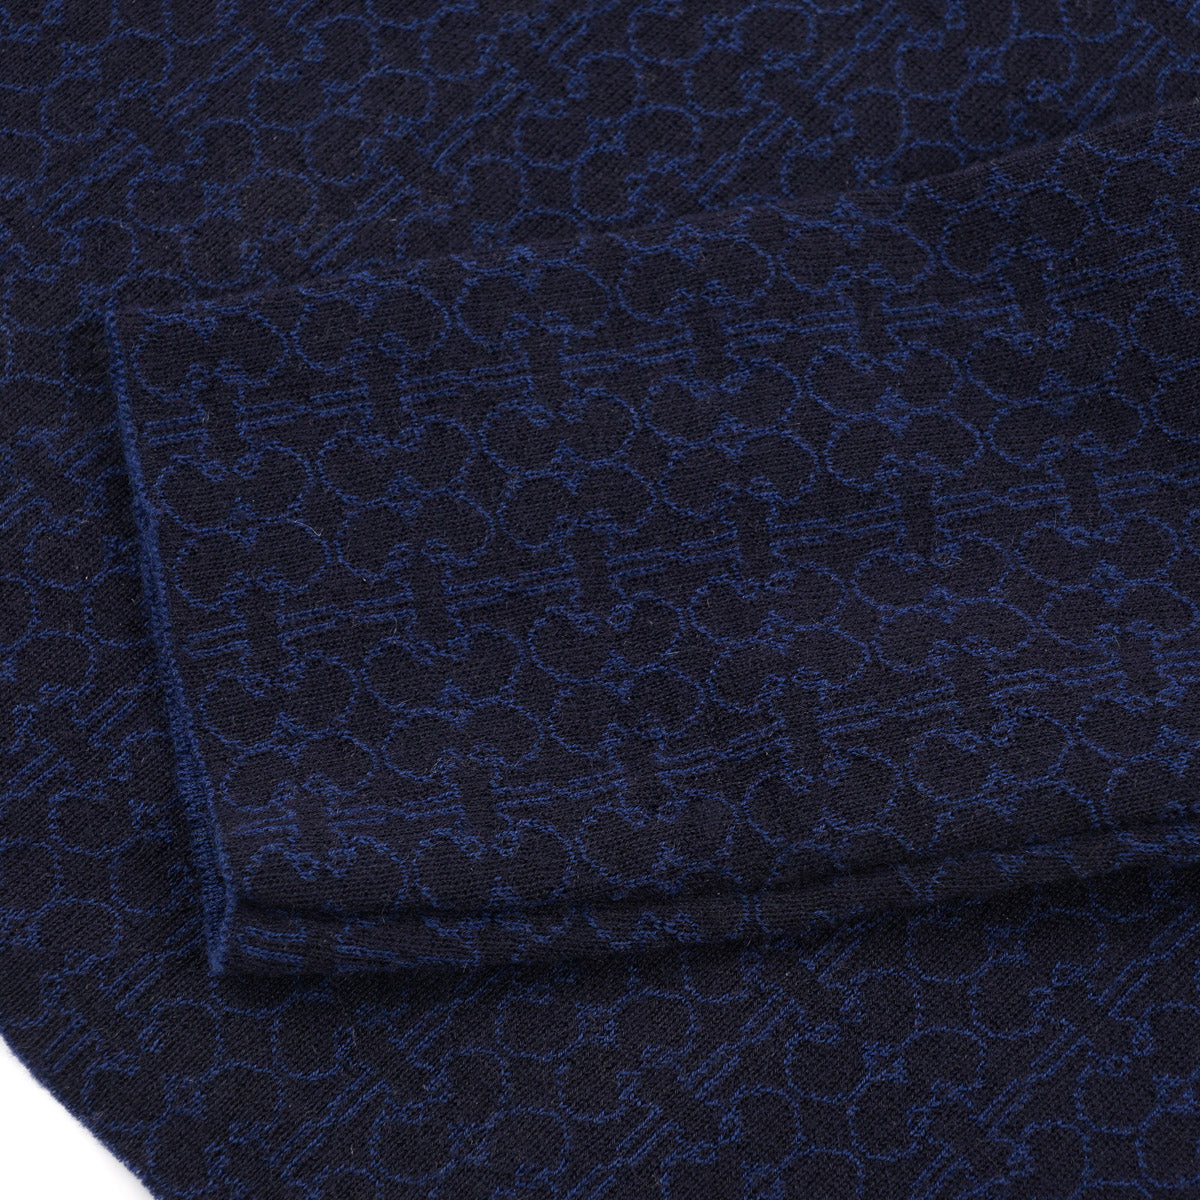 Kiton KNT Patterned Cotton Sweater - Top Shelf Apparel